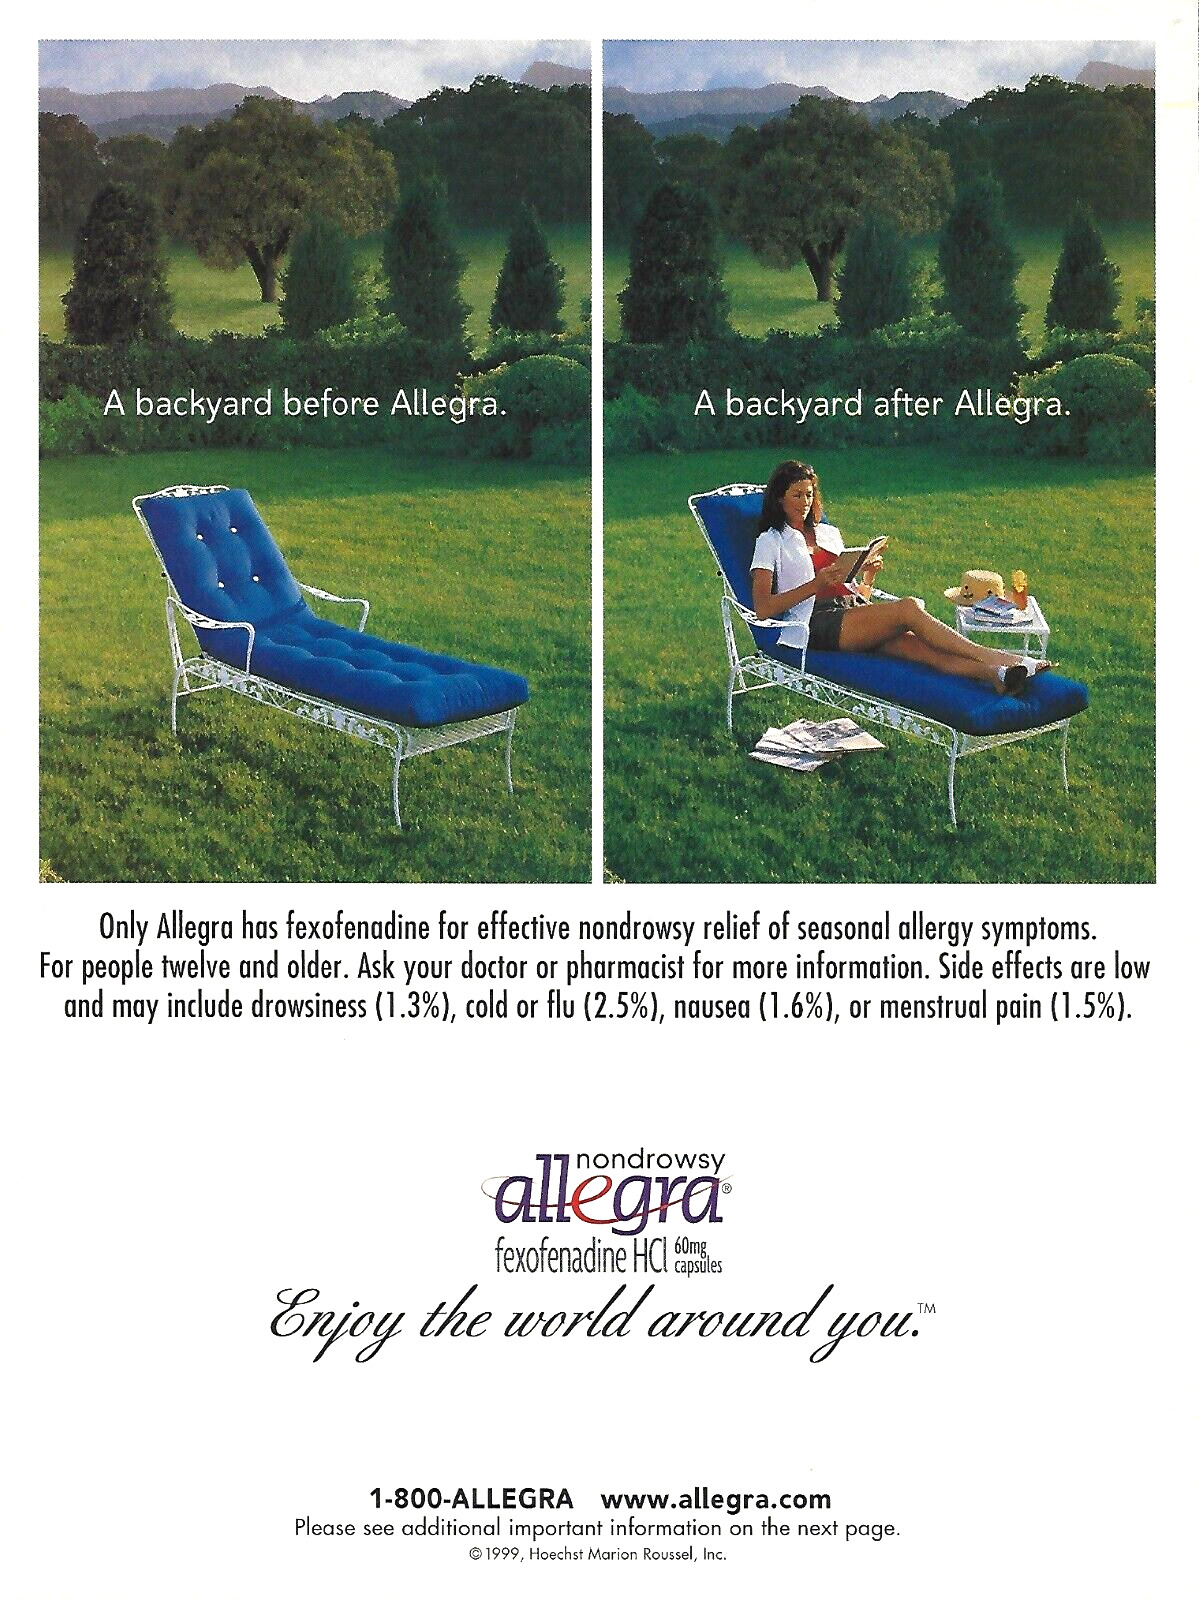 2000 Allegra Seasonal Allergy Medicine Backyard vintage Print Ad Advertisement